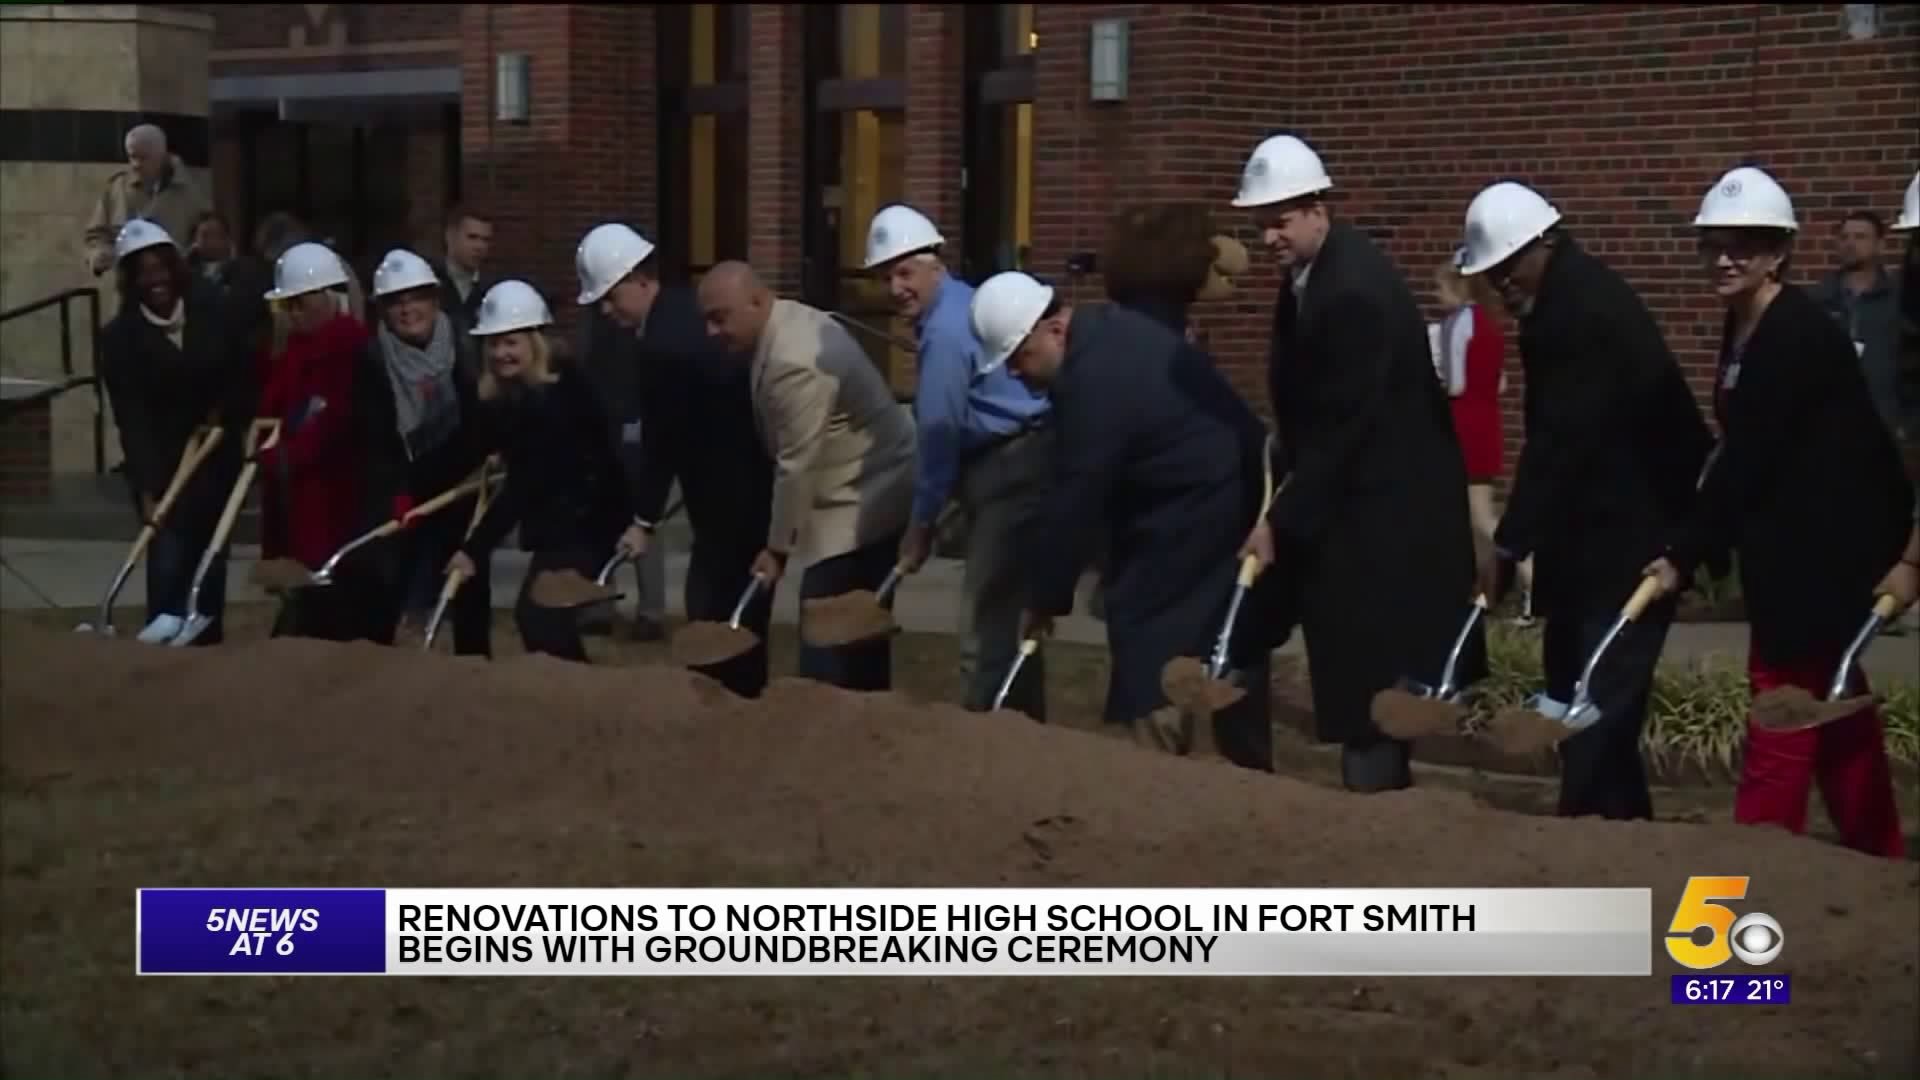 Groundbreaking Ceremony for Northside High School Renovations